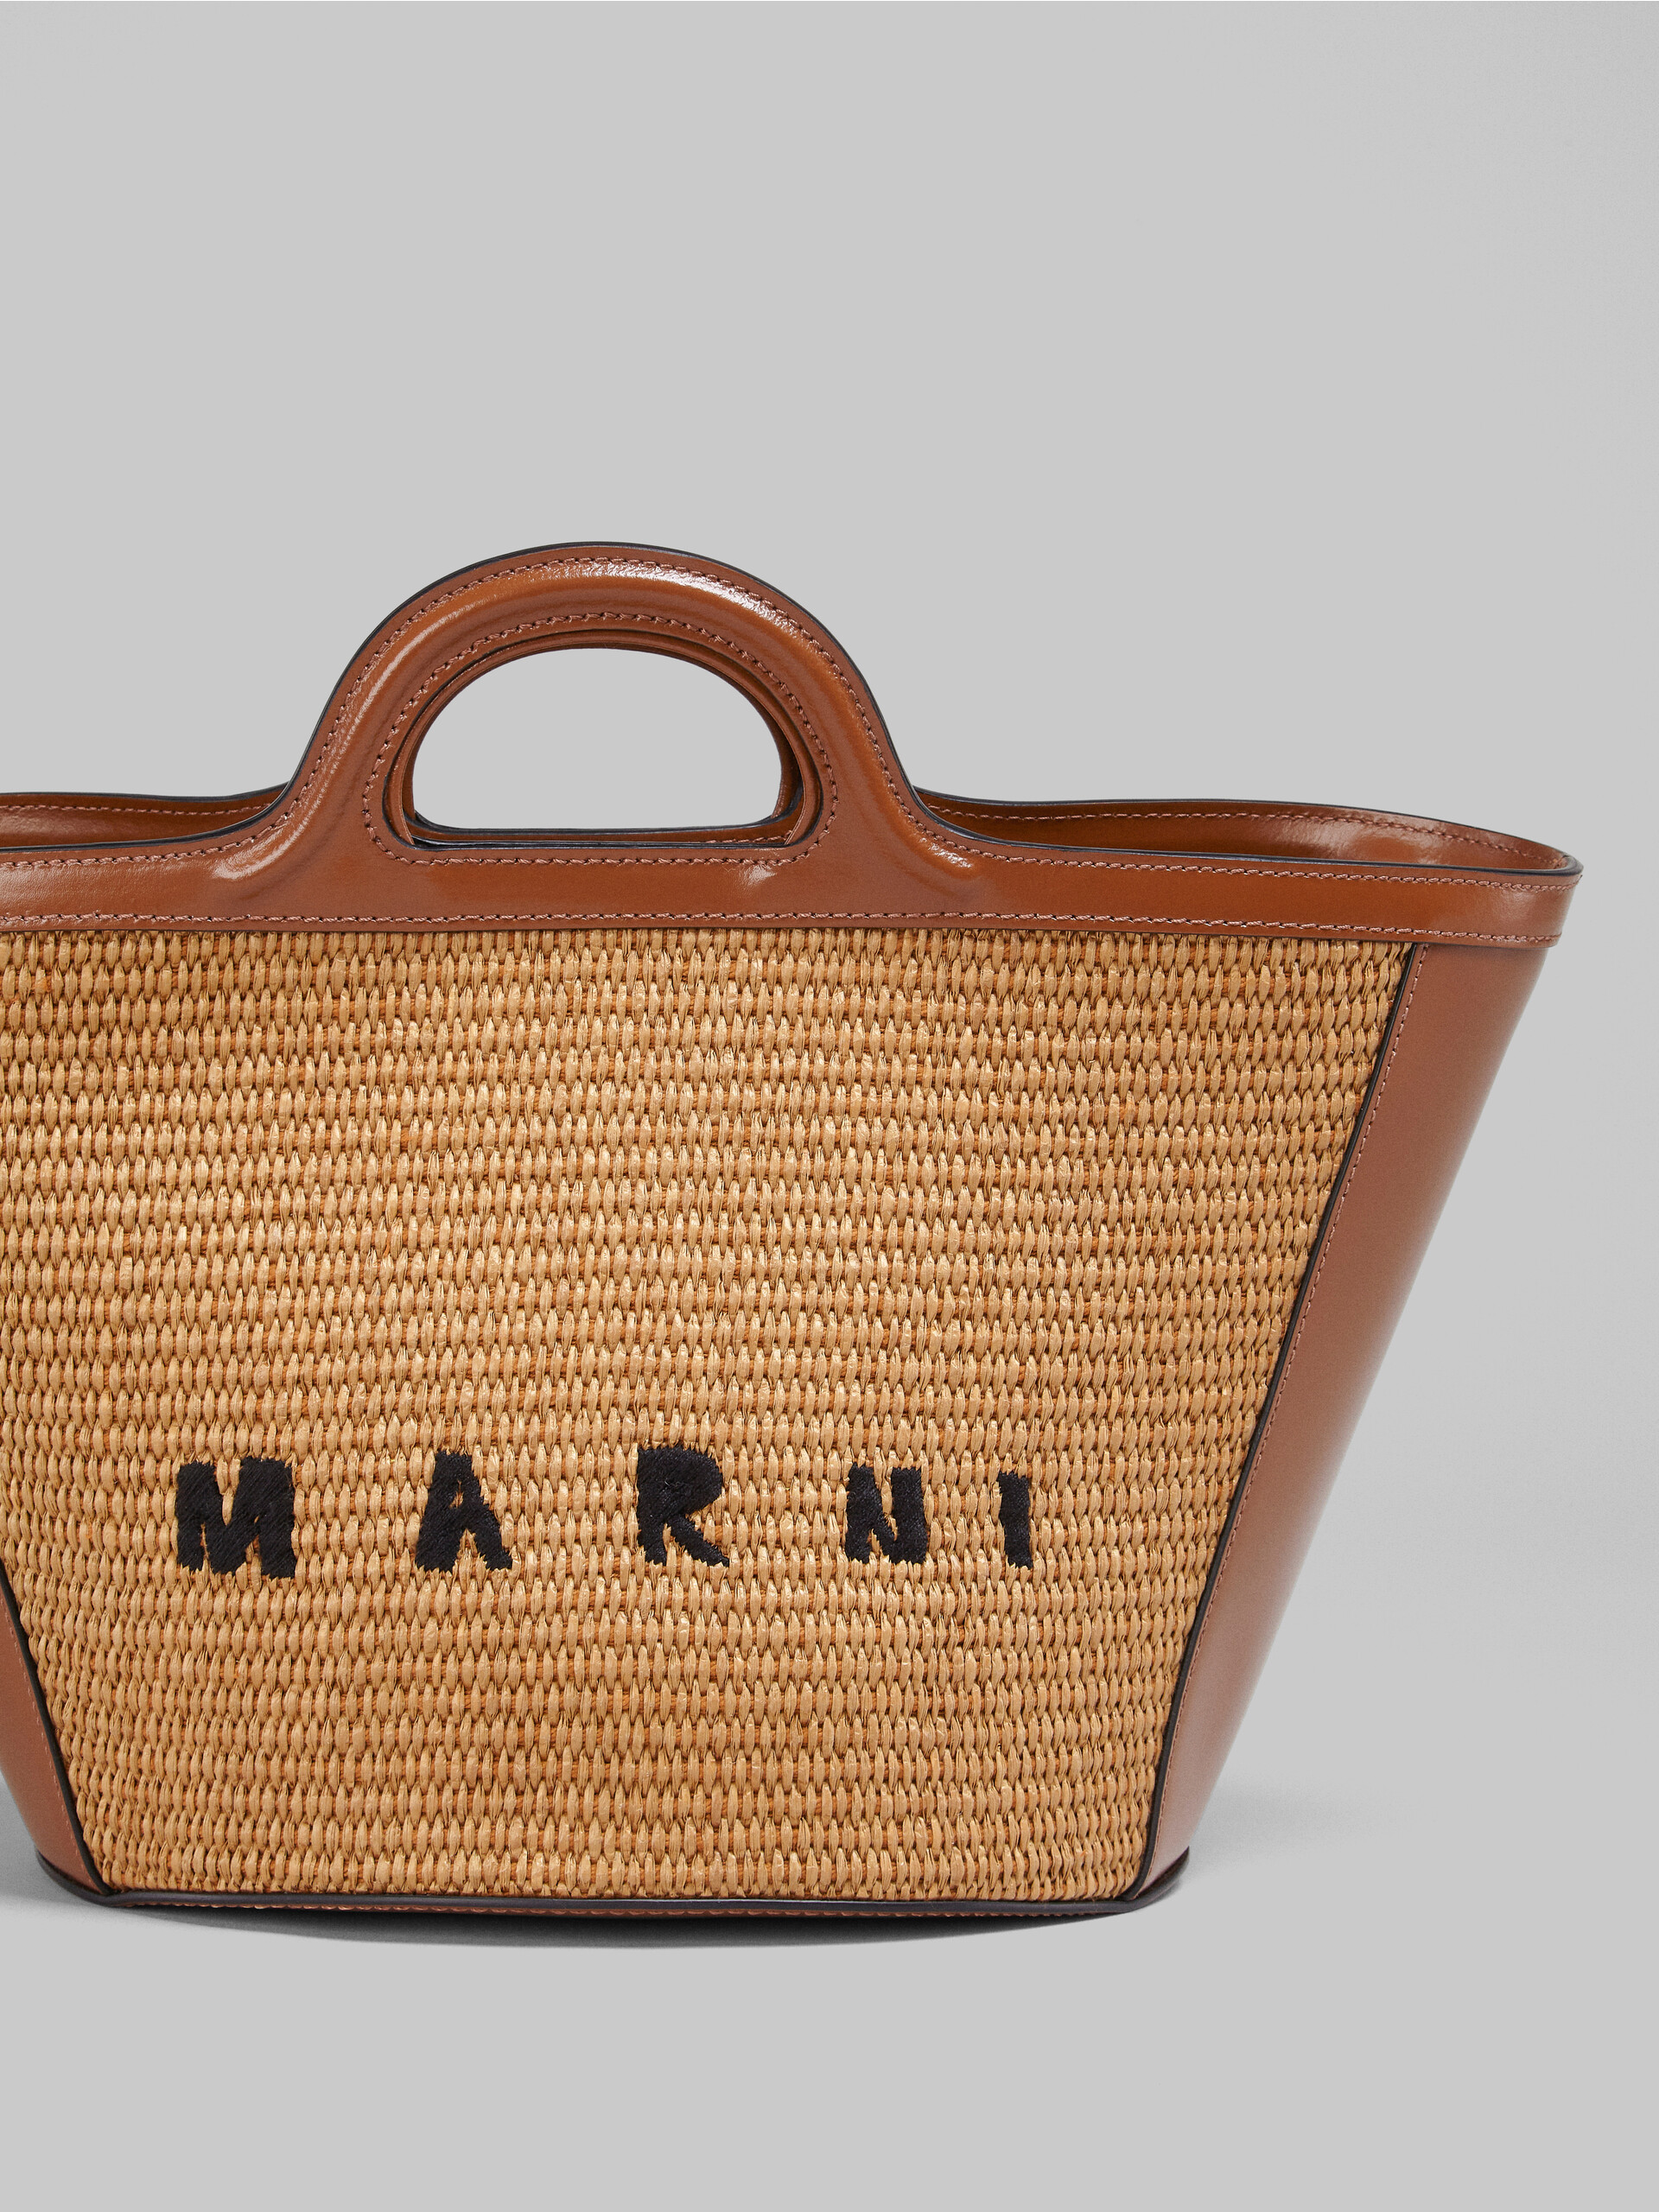 TROPICALIA small bag in brown leather and raffia - Handbags - Image 4